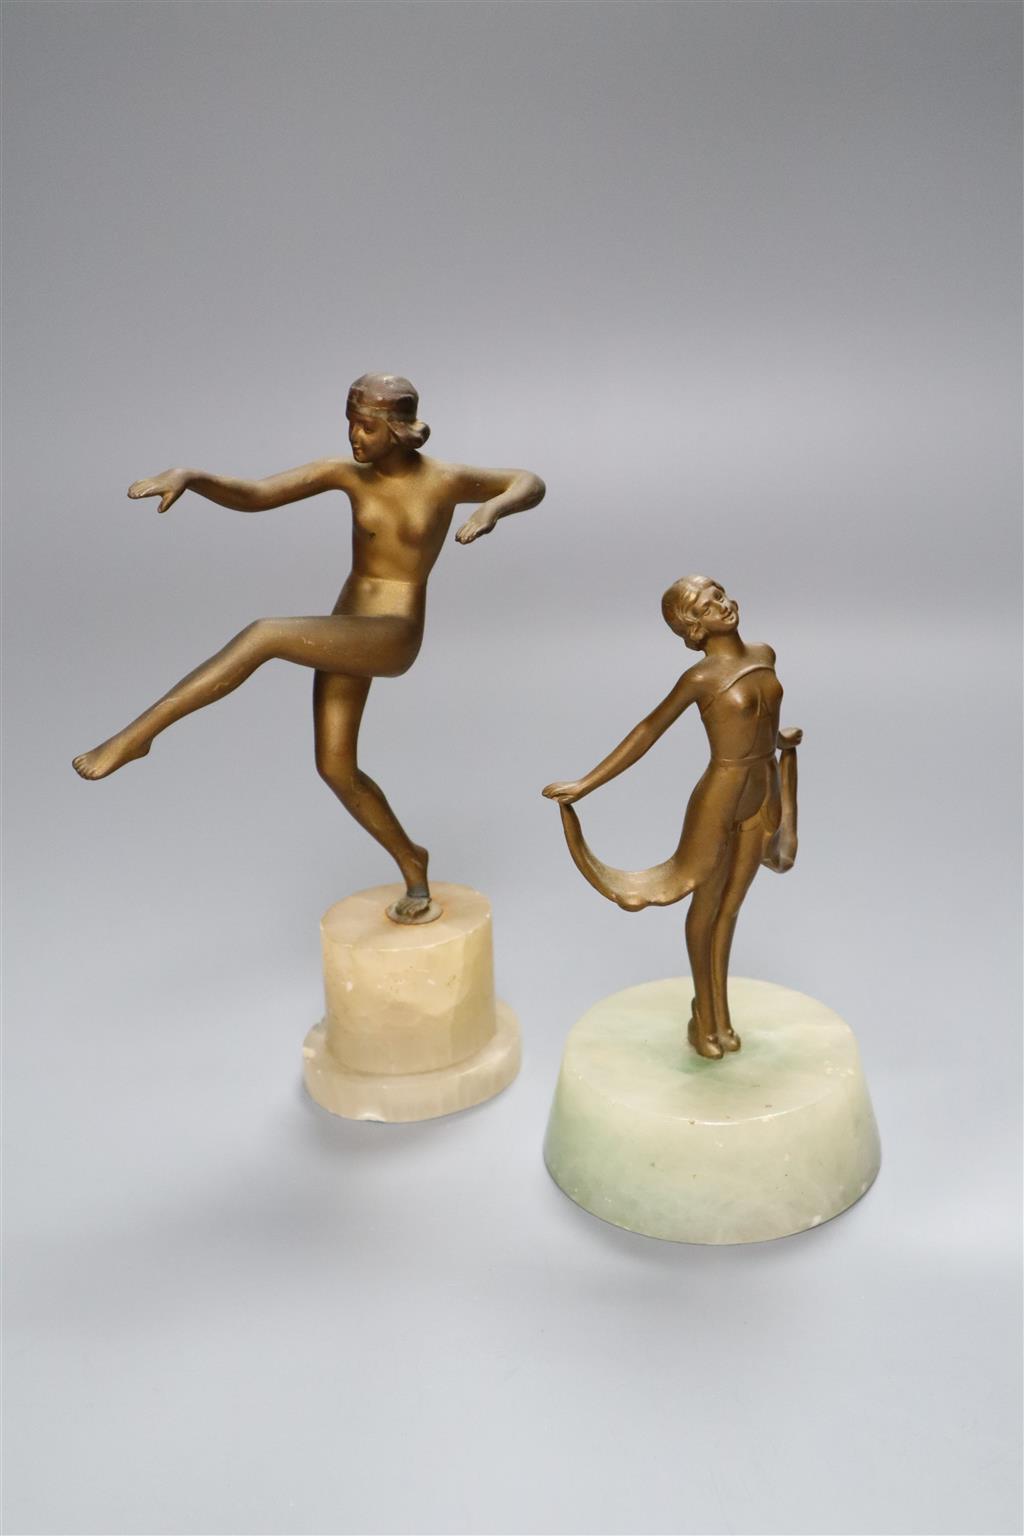 Two Art Deco bronzed figures, 21cm and 17cm